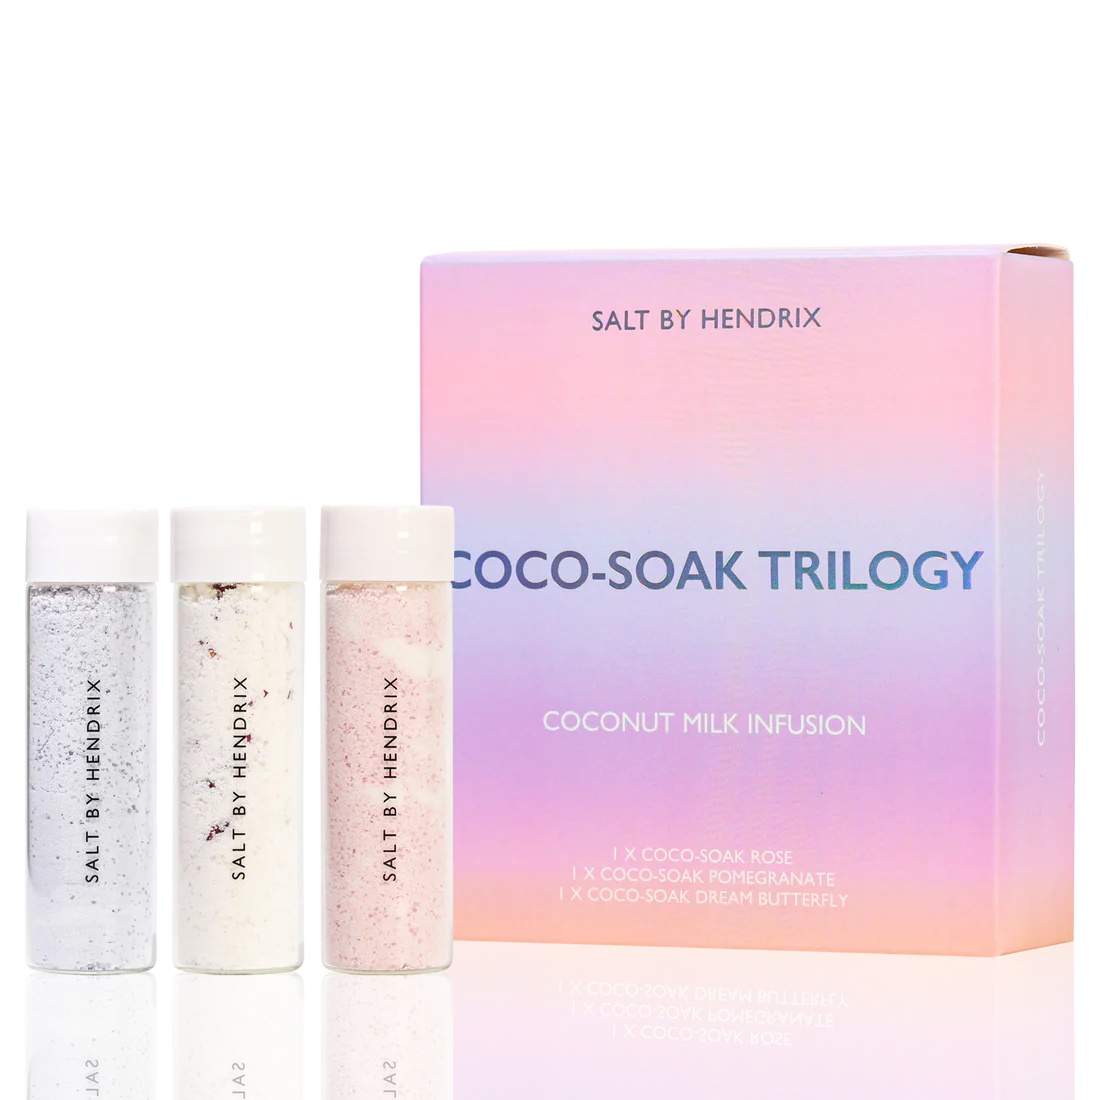 Cocosoak Trilogy